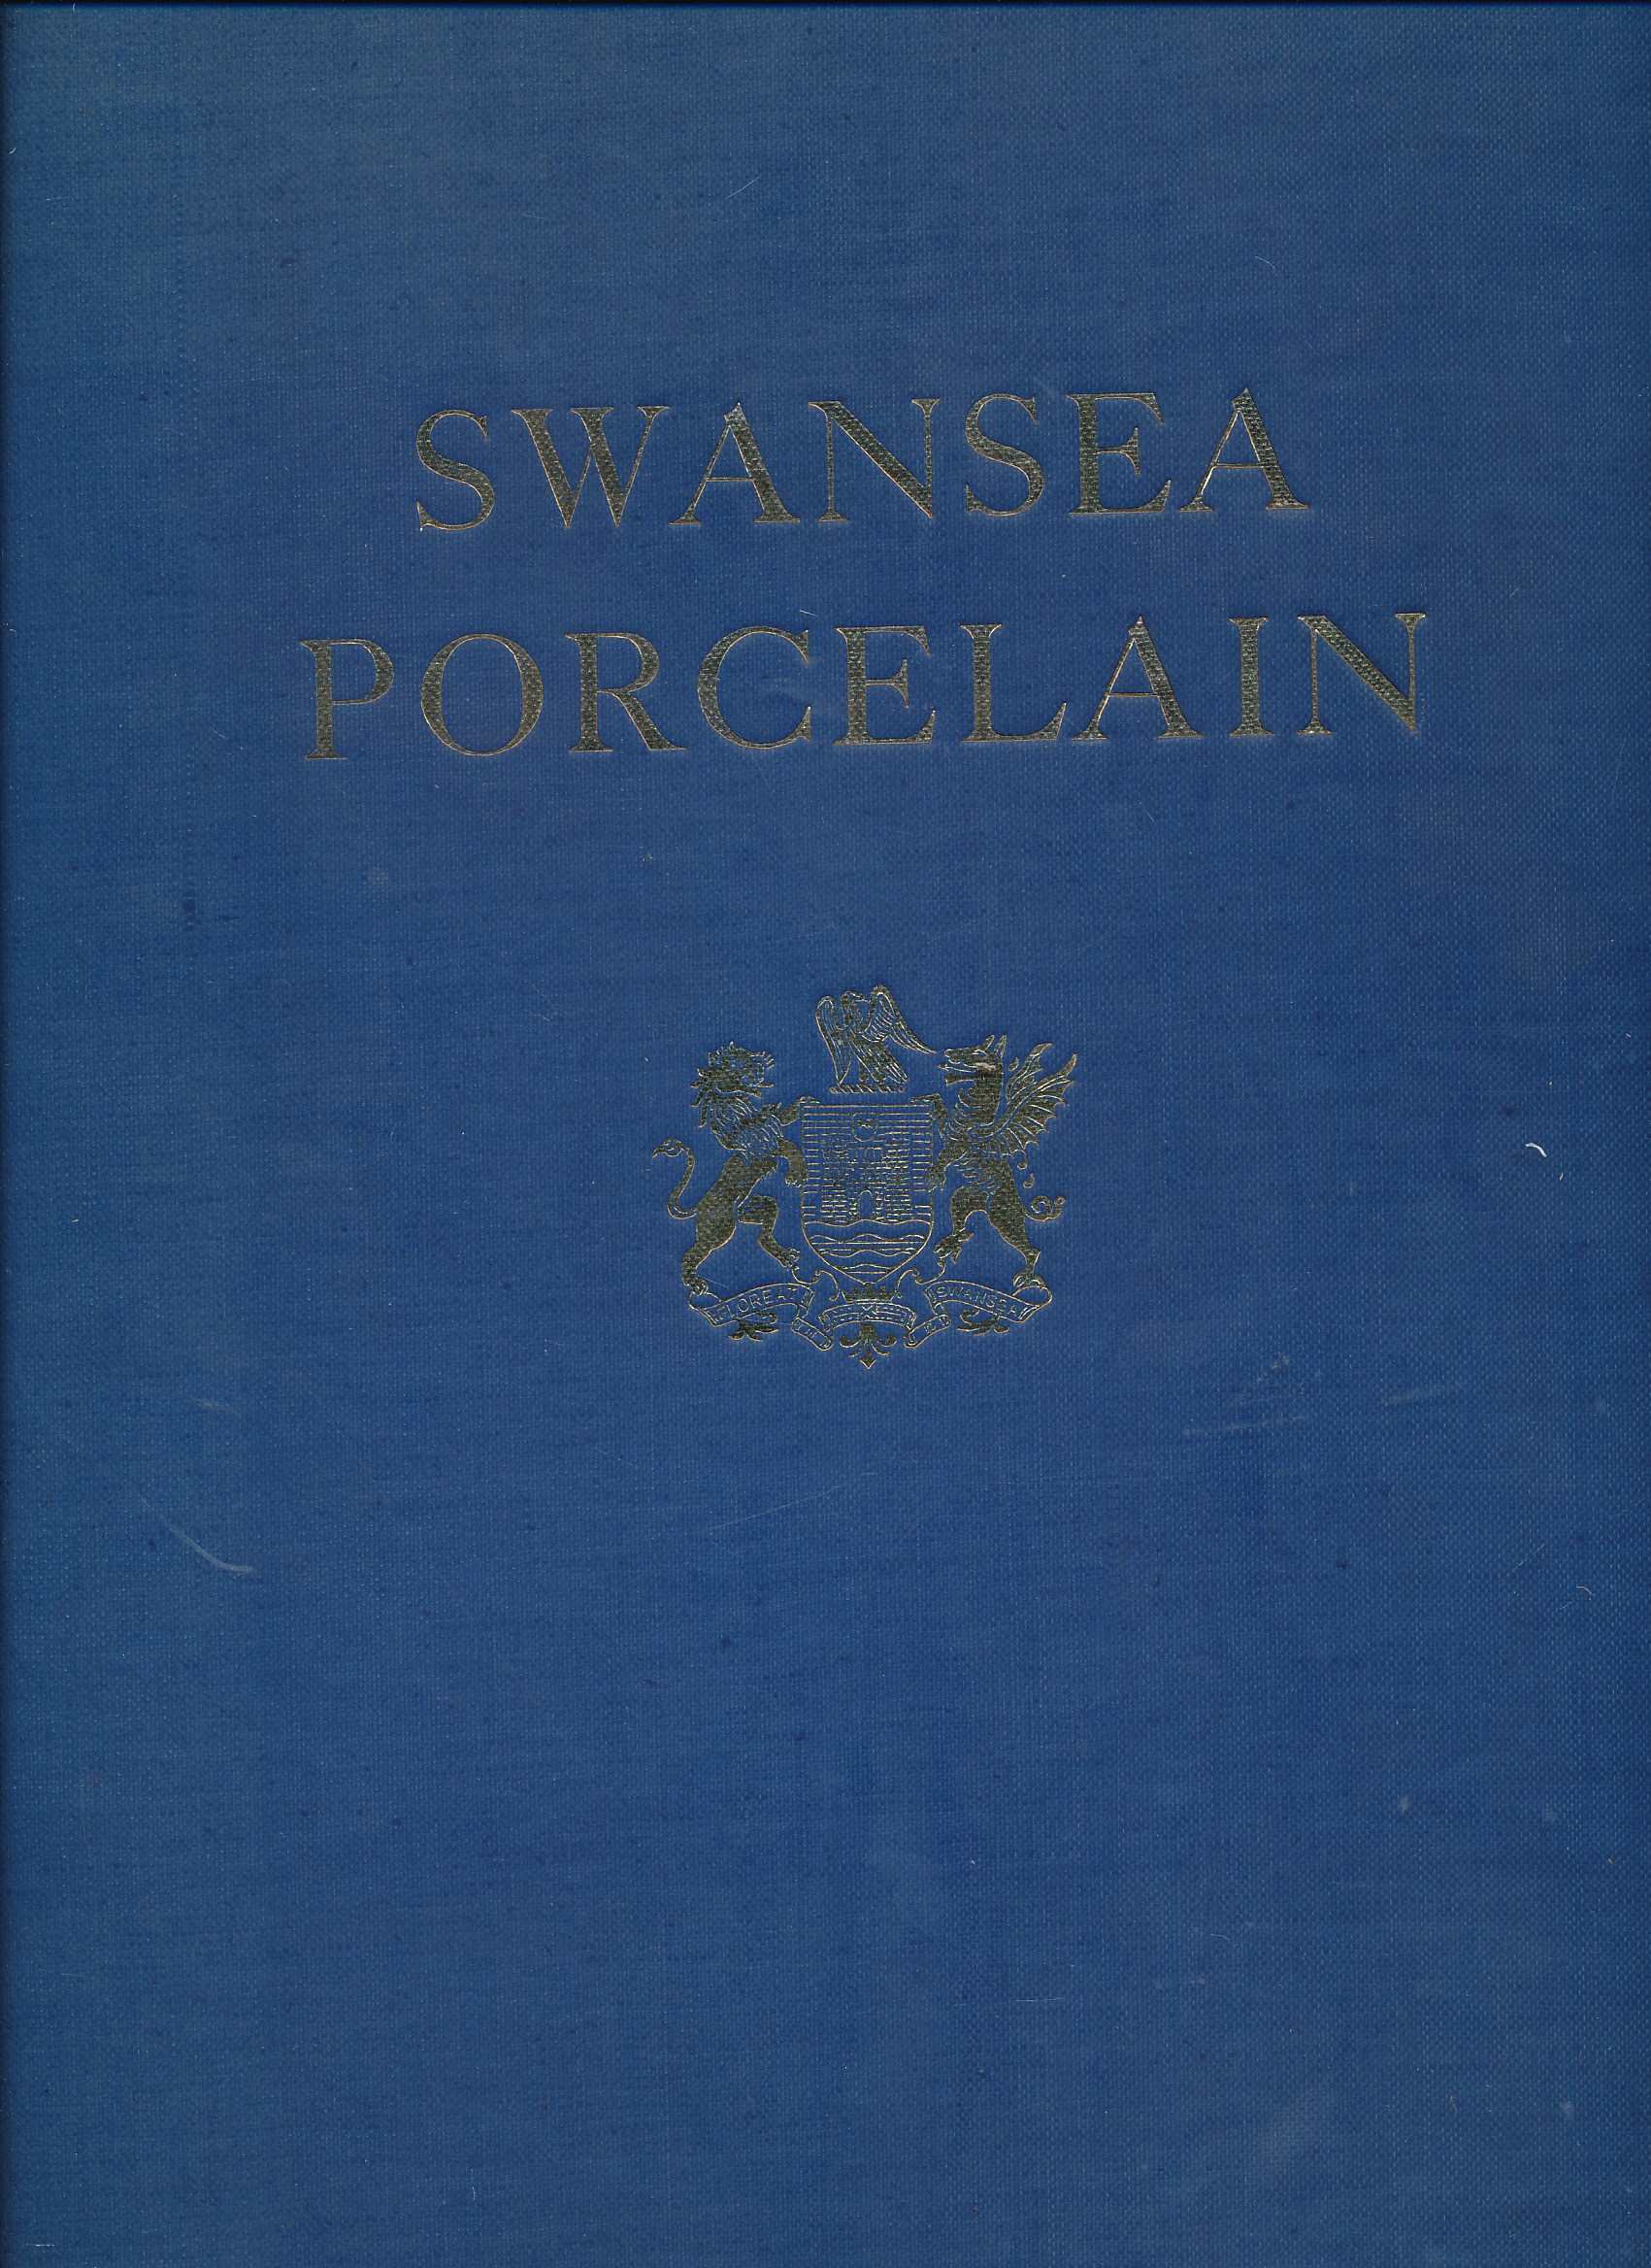 Swansea Porcelain